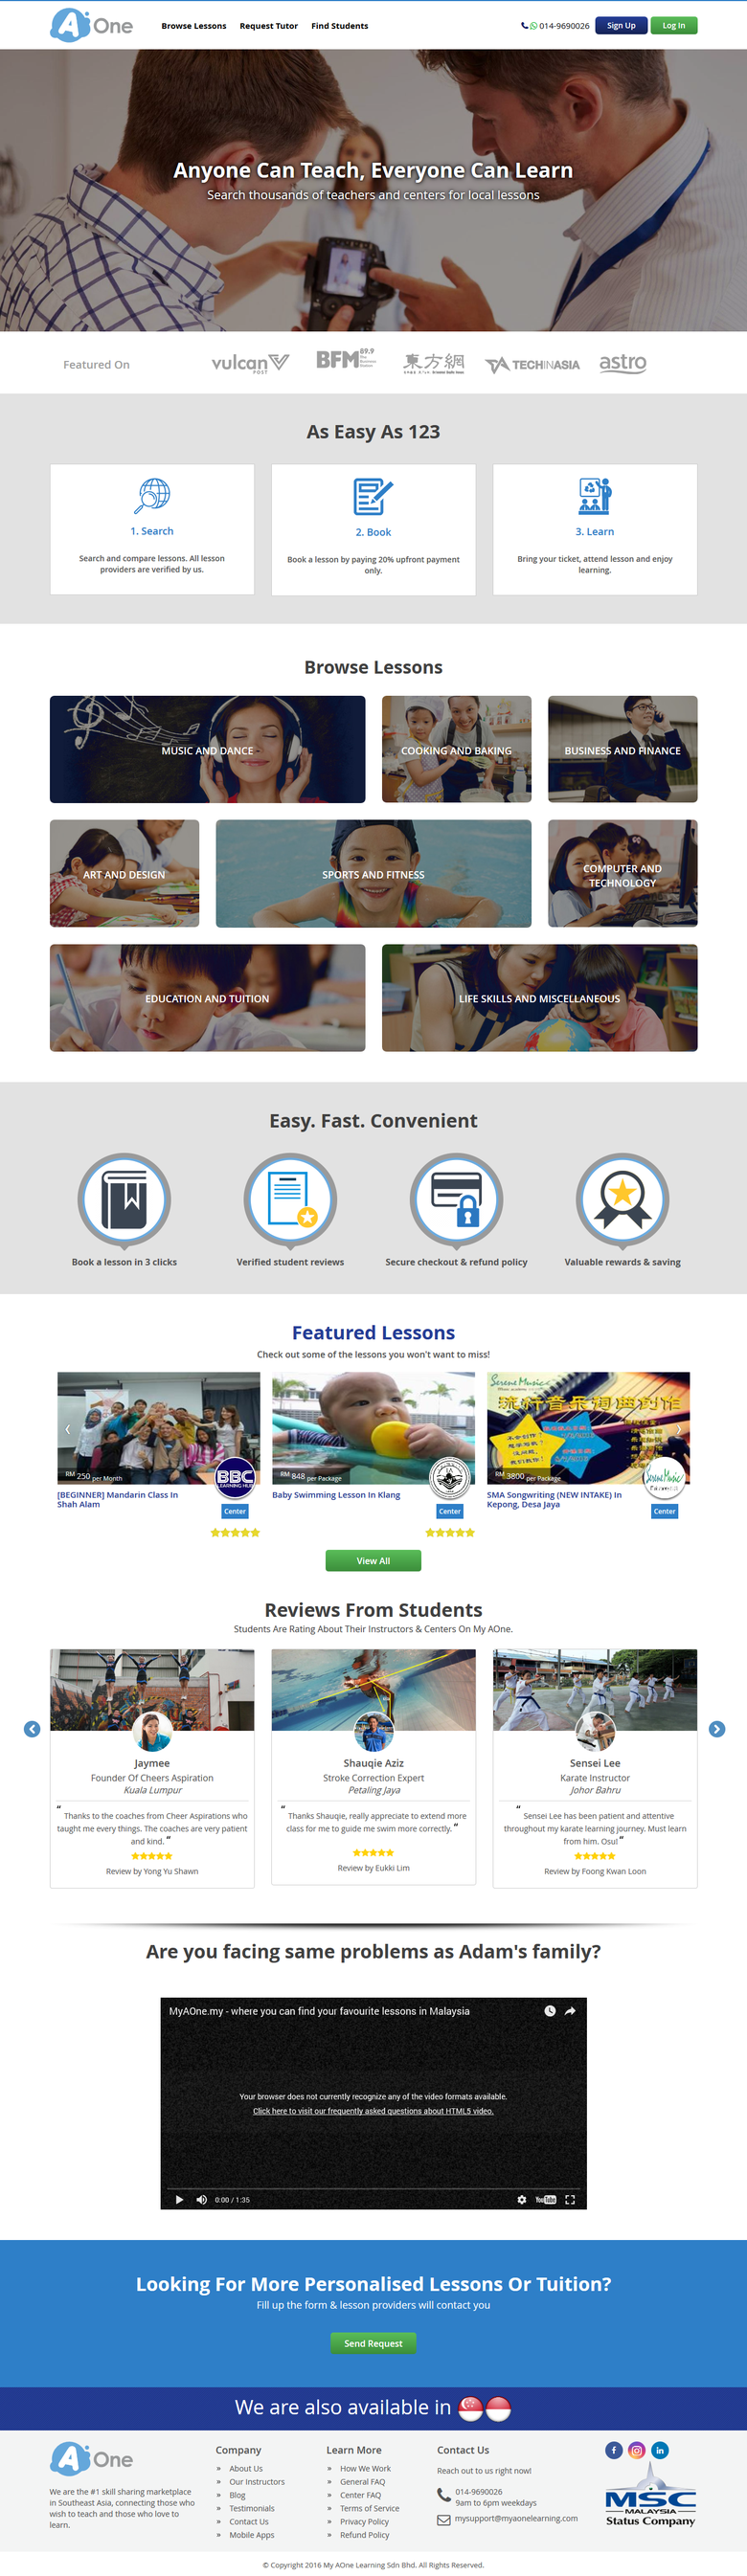 E -Learning portal